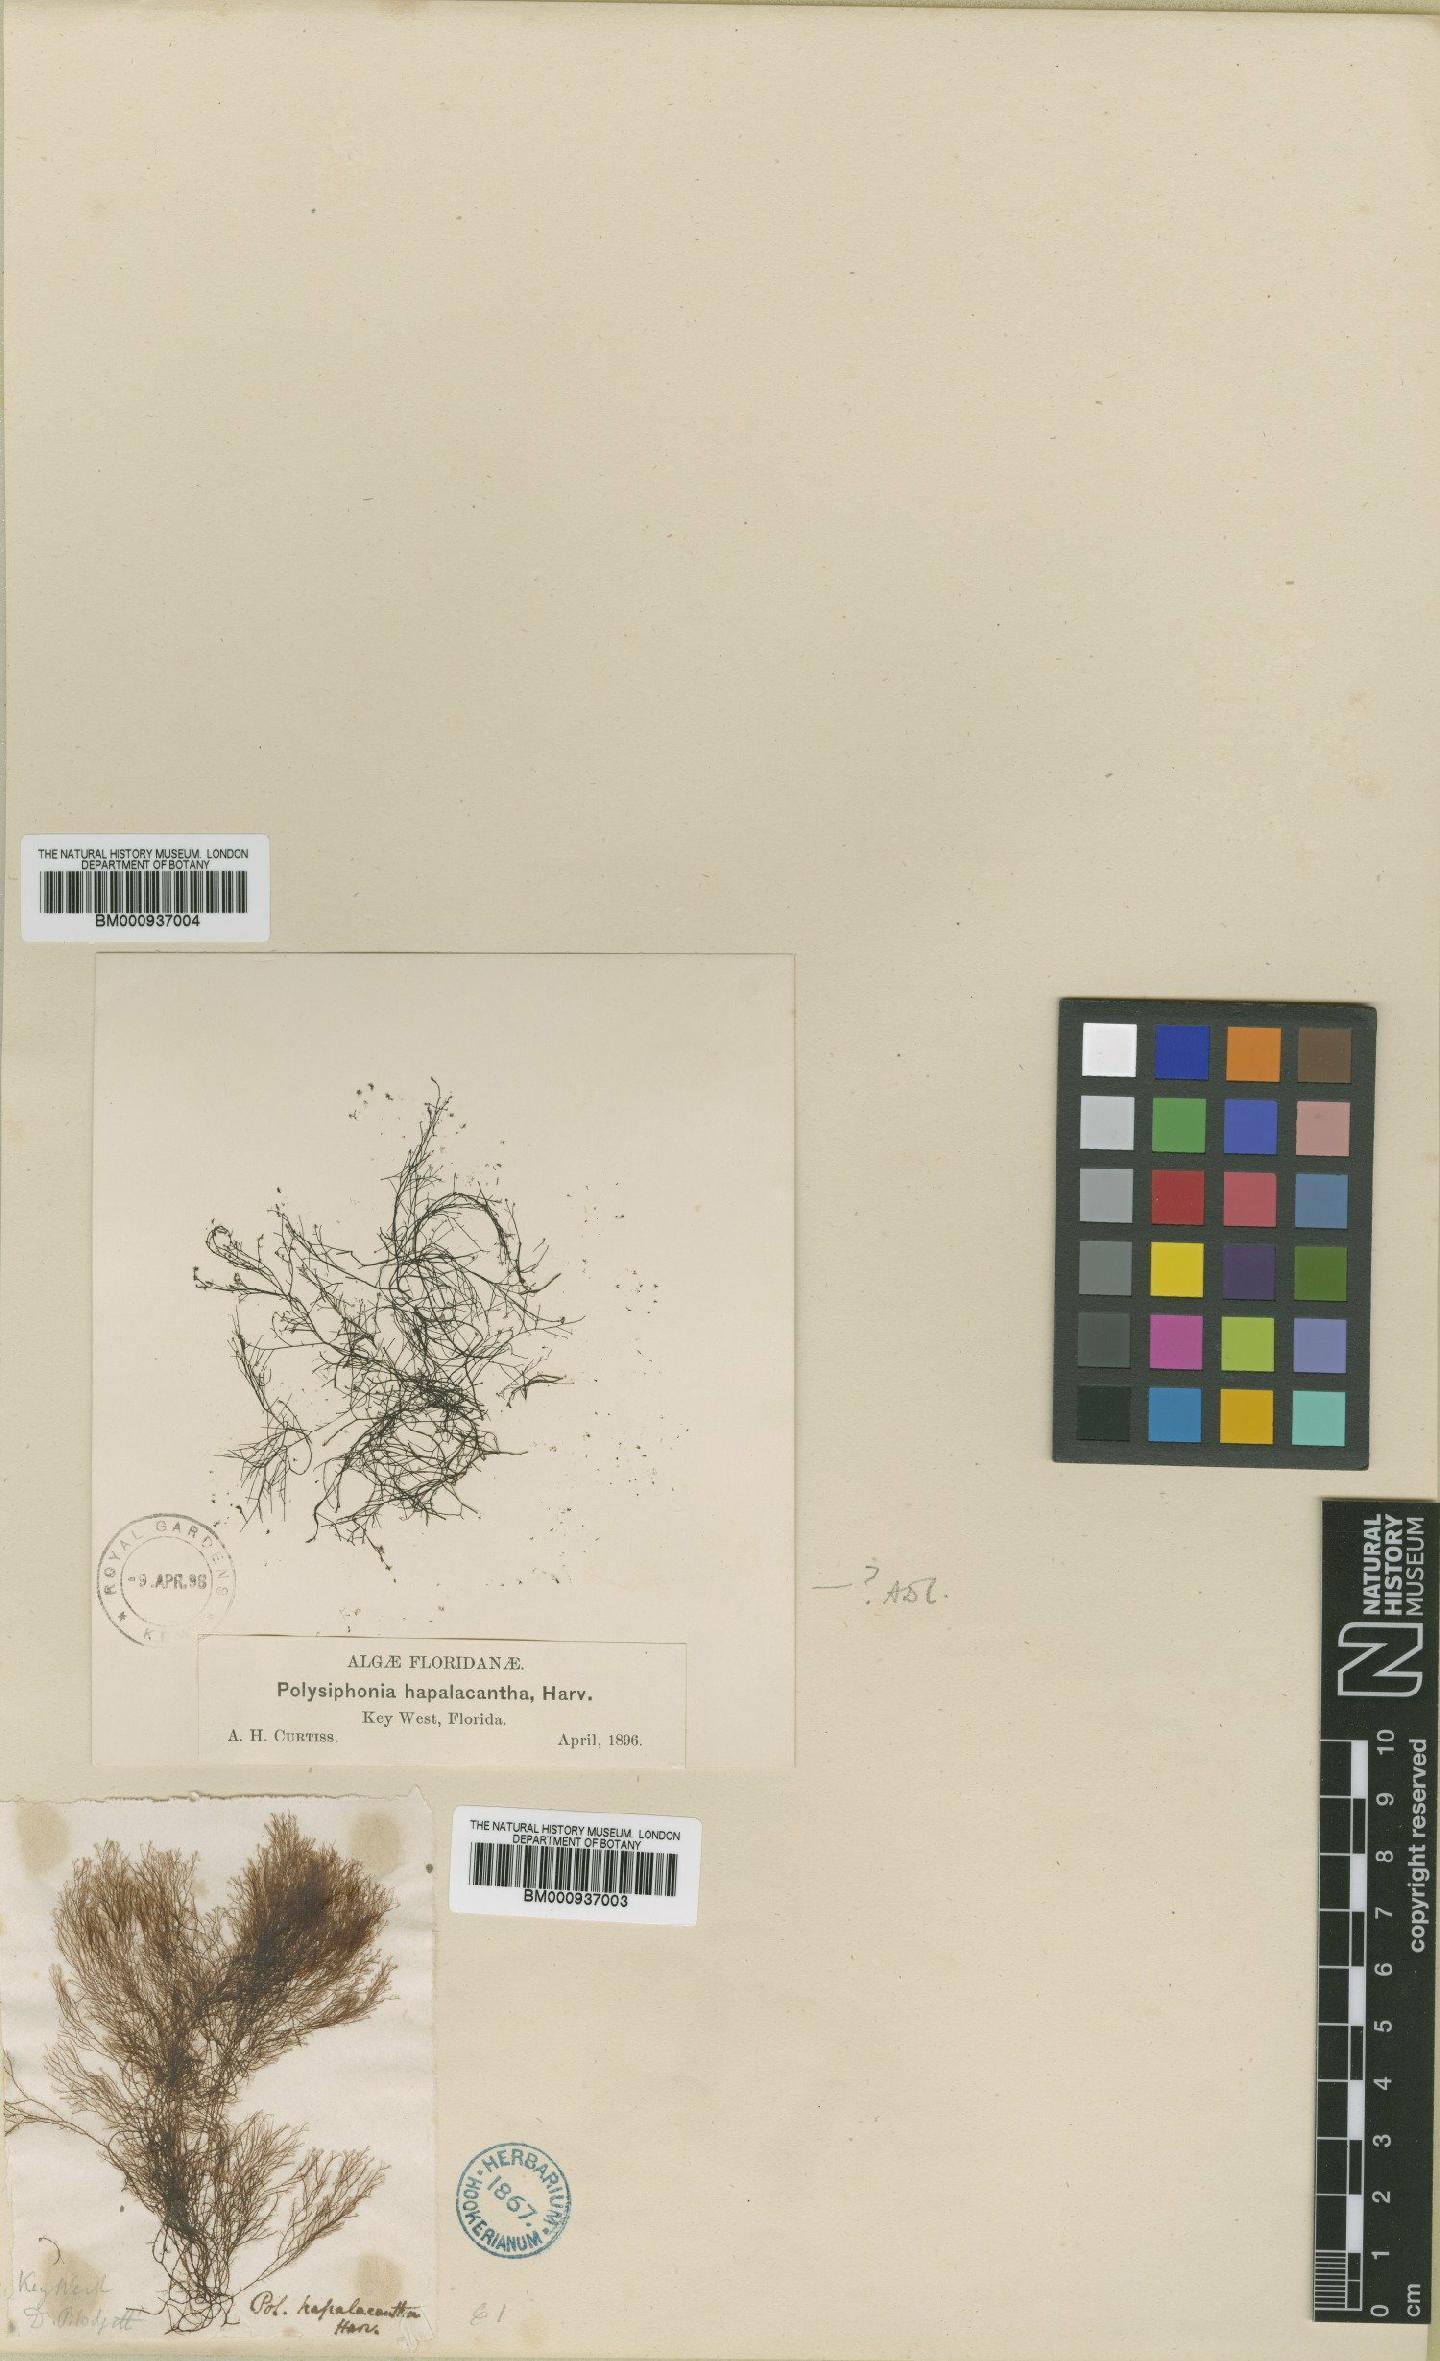 To NHMUK collection (Polysiphonia hapalacantha Harv.; Syntype; NHMUK:ecatalogue:465388)